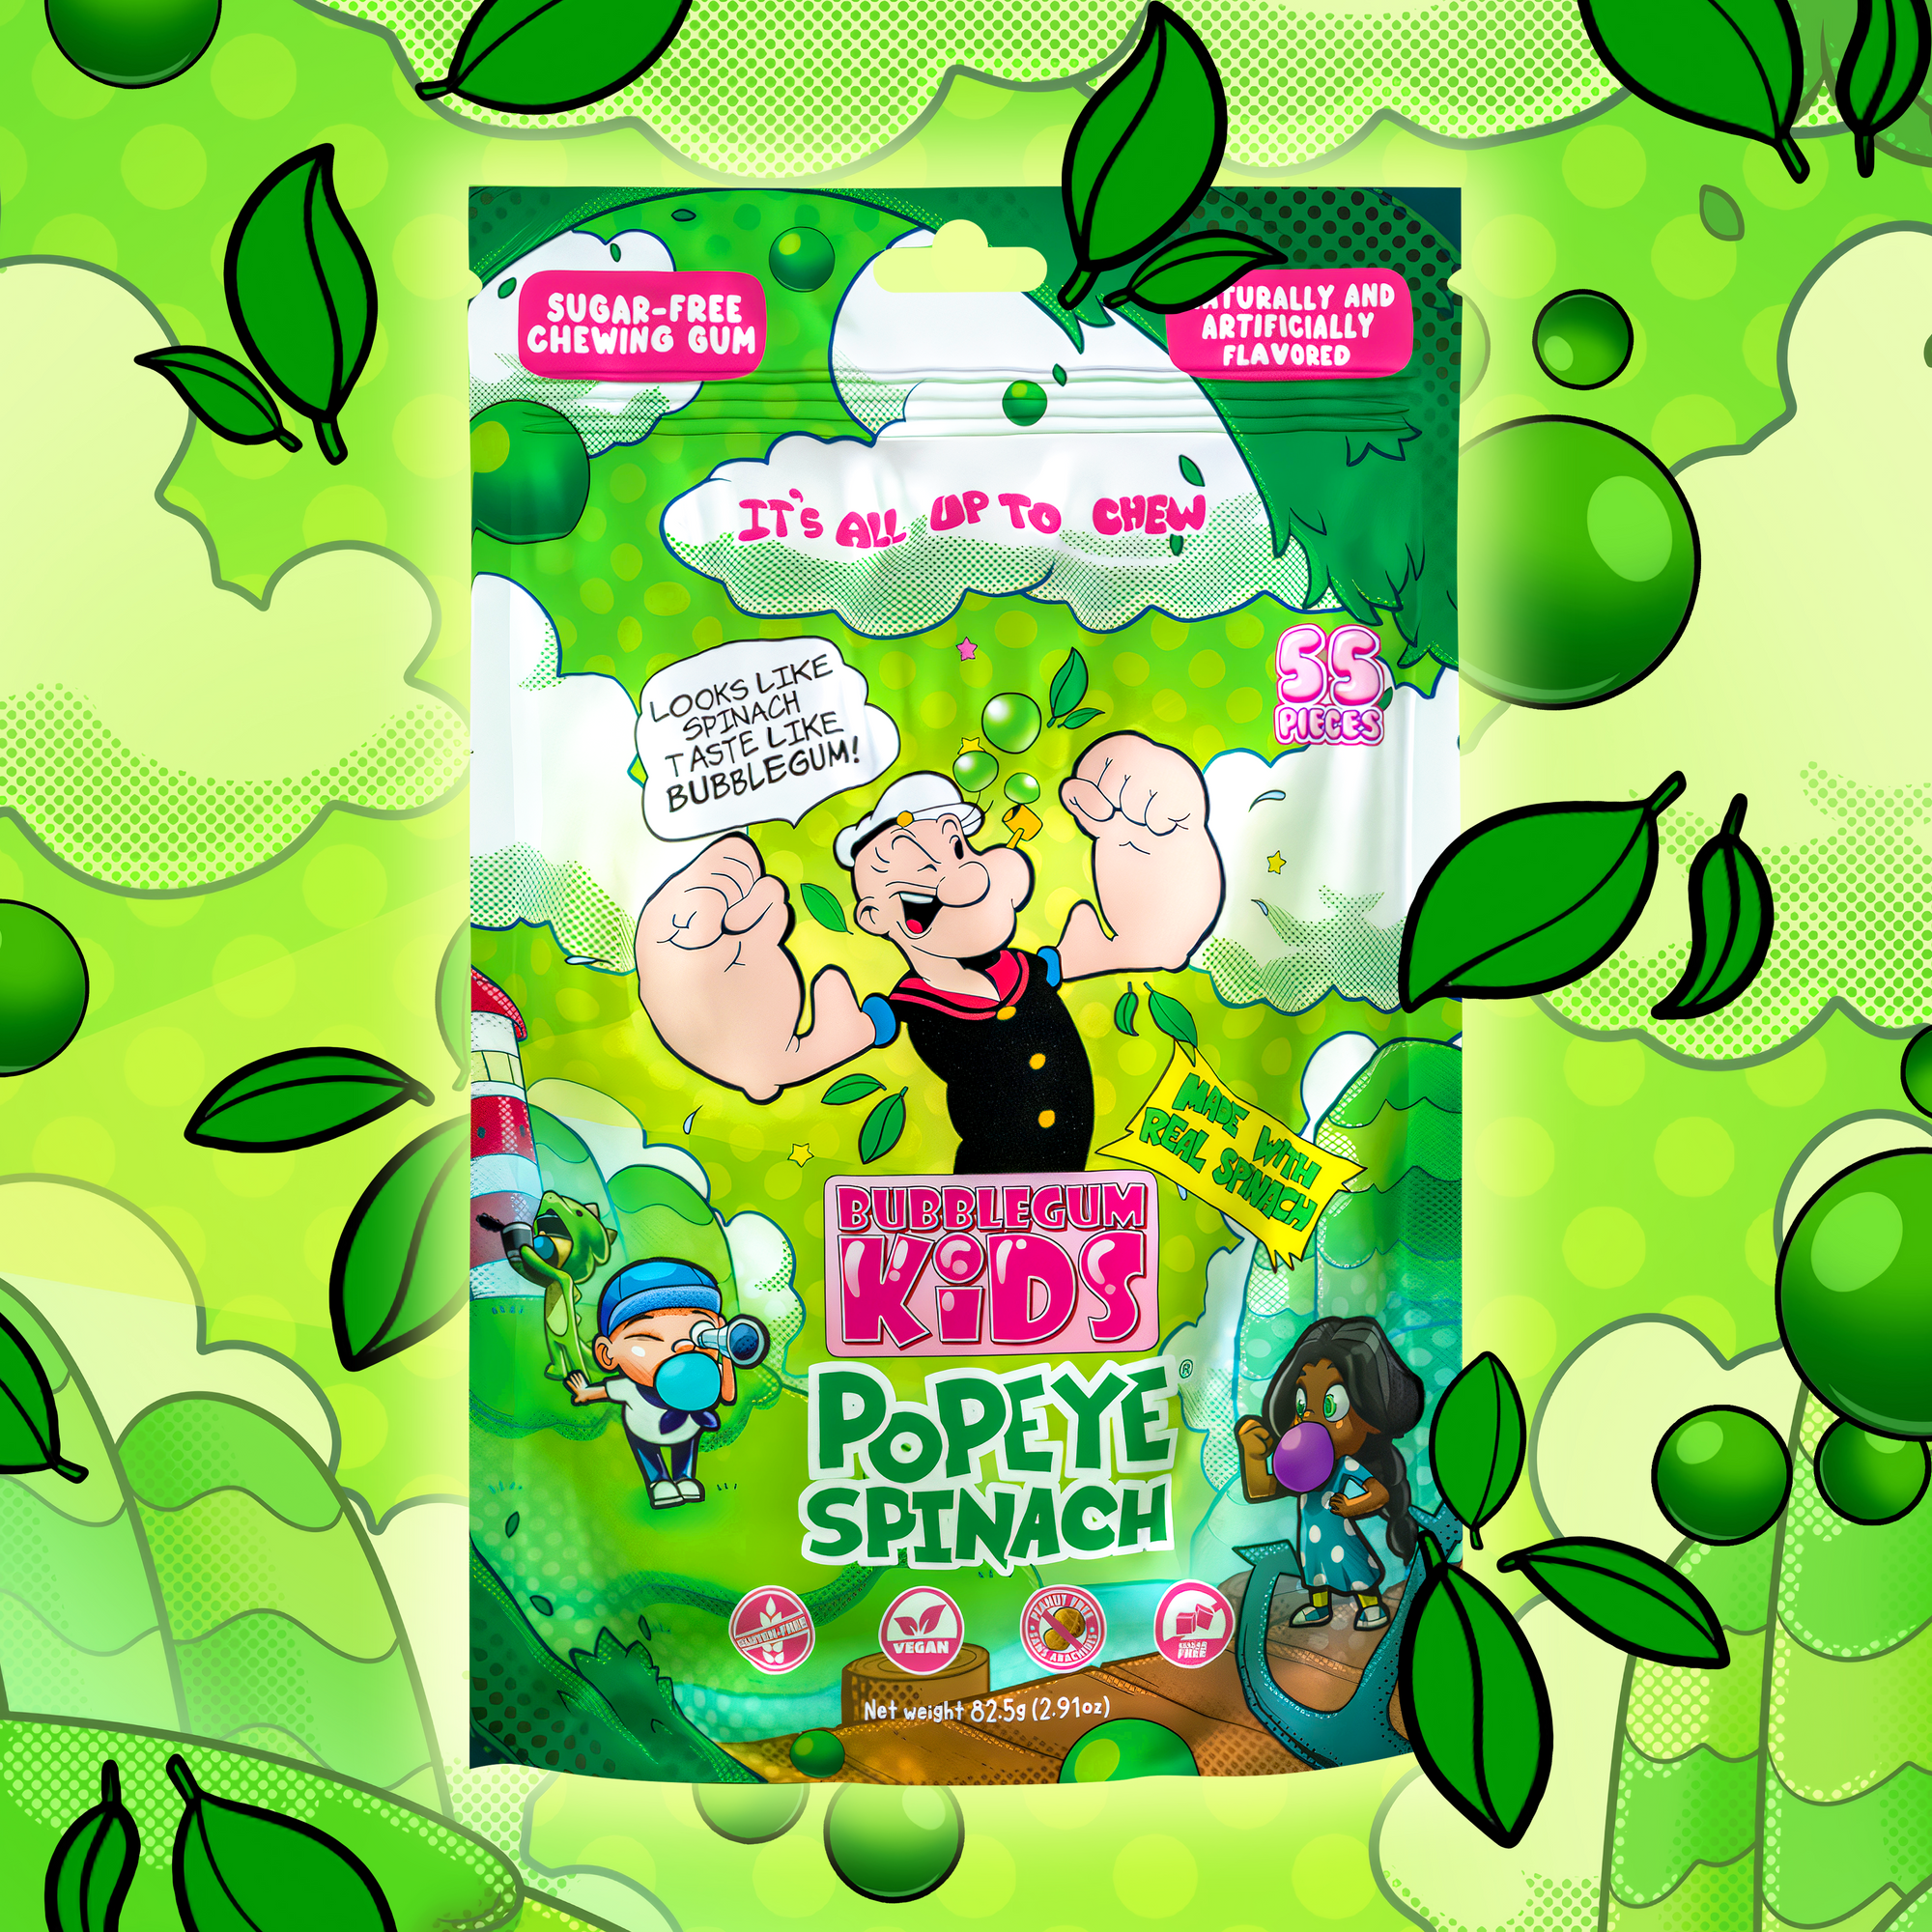 Popeye Spinach Gum PRE-ORDER